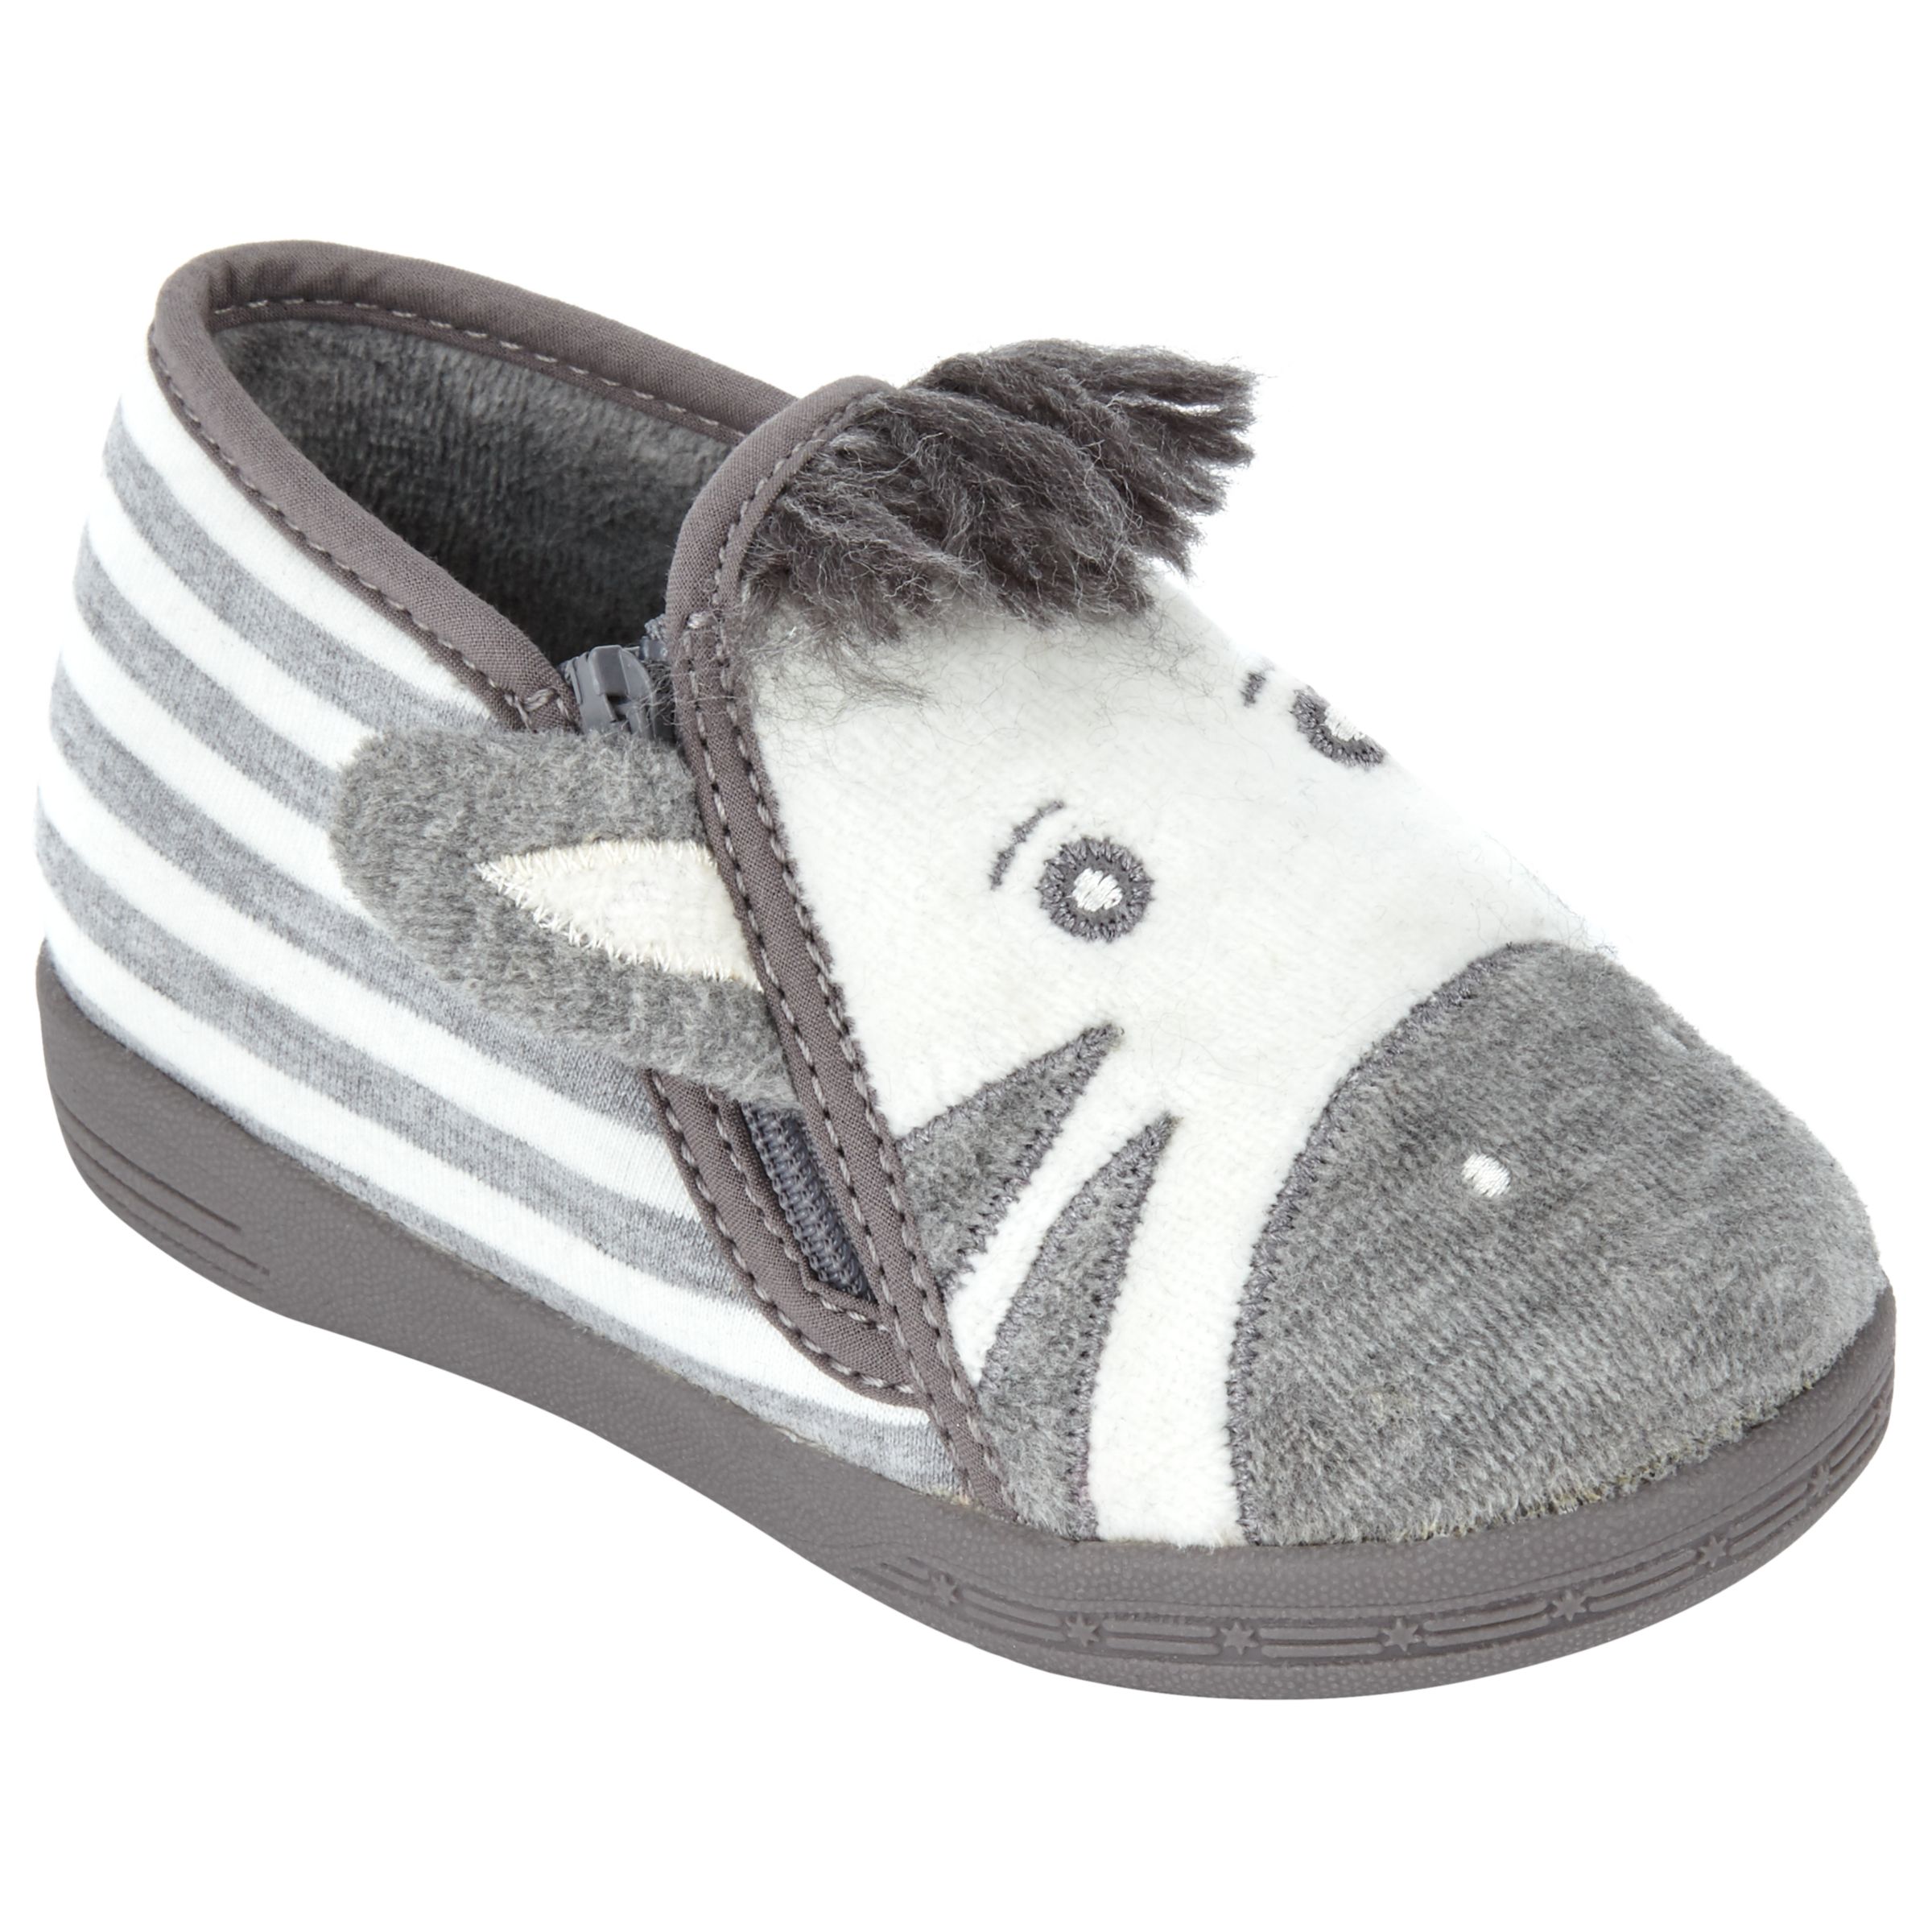 John Lewis & Partners Baby Zebra Slippers, Grey